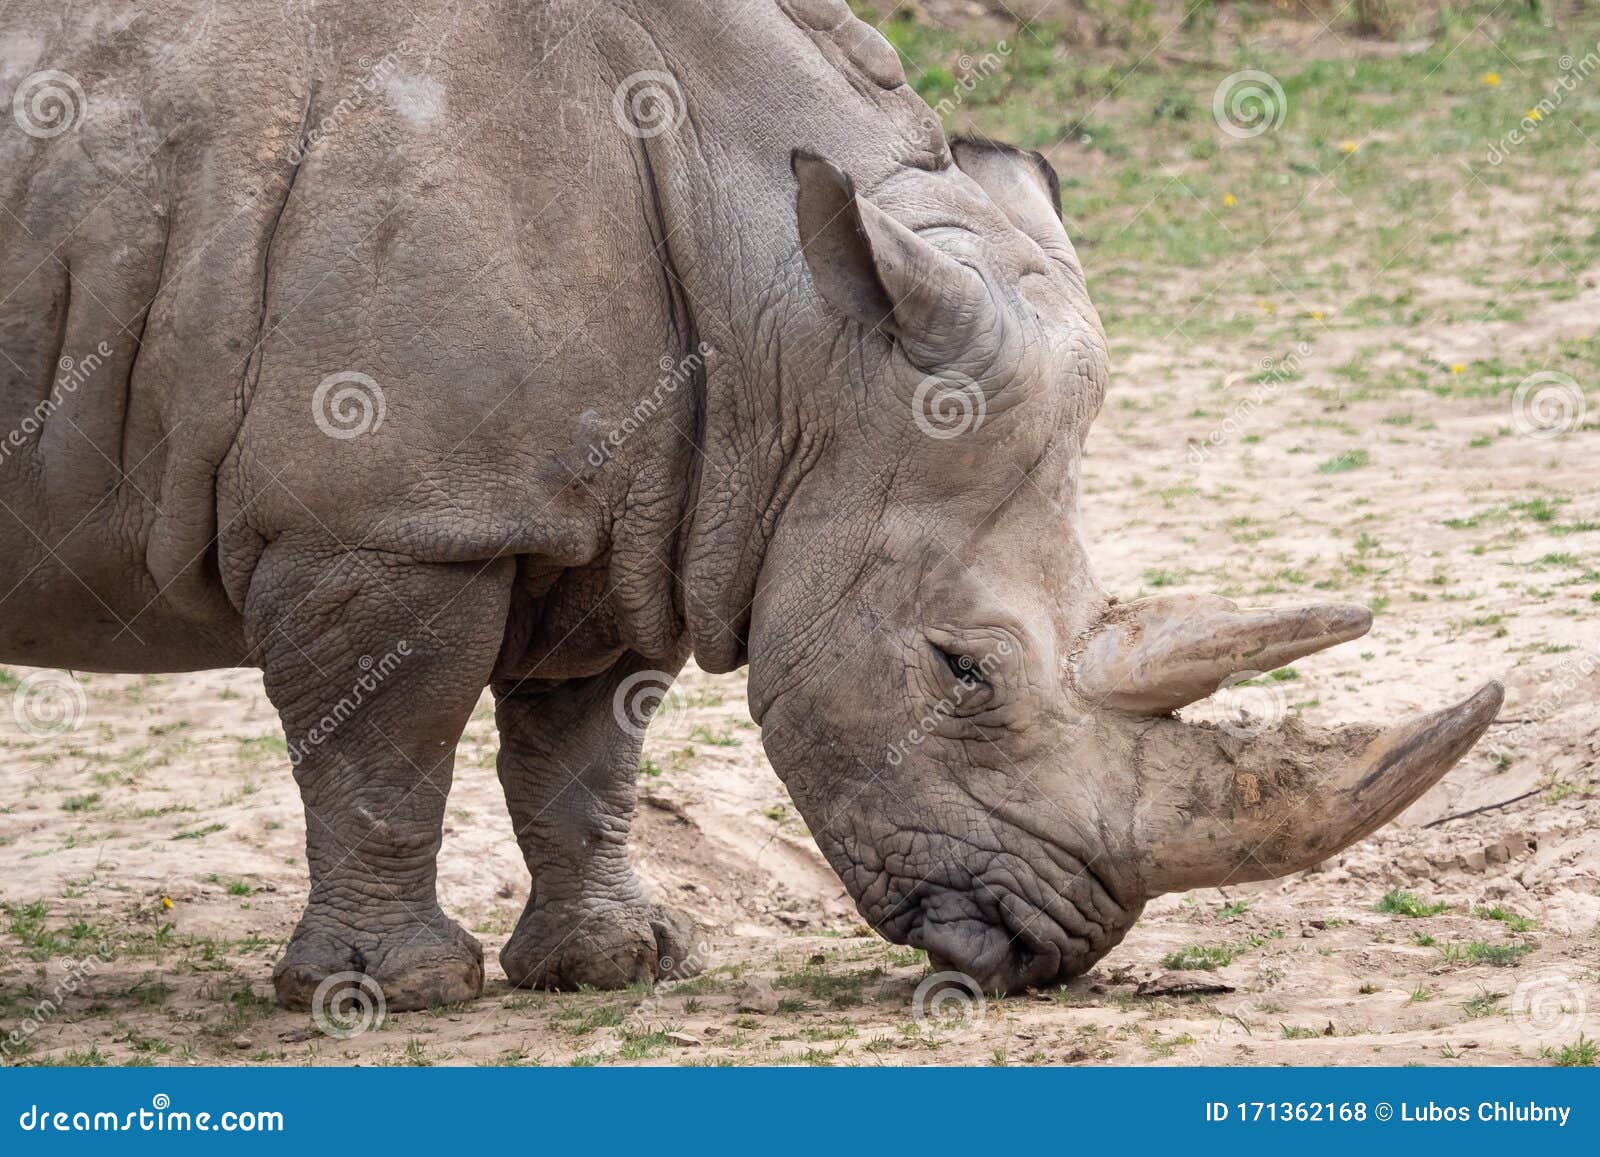 southern white rhinoceros ceratotherium simum simum. critically endangered animal species